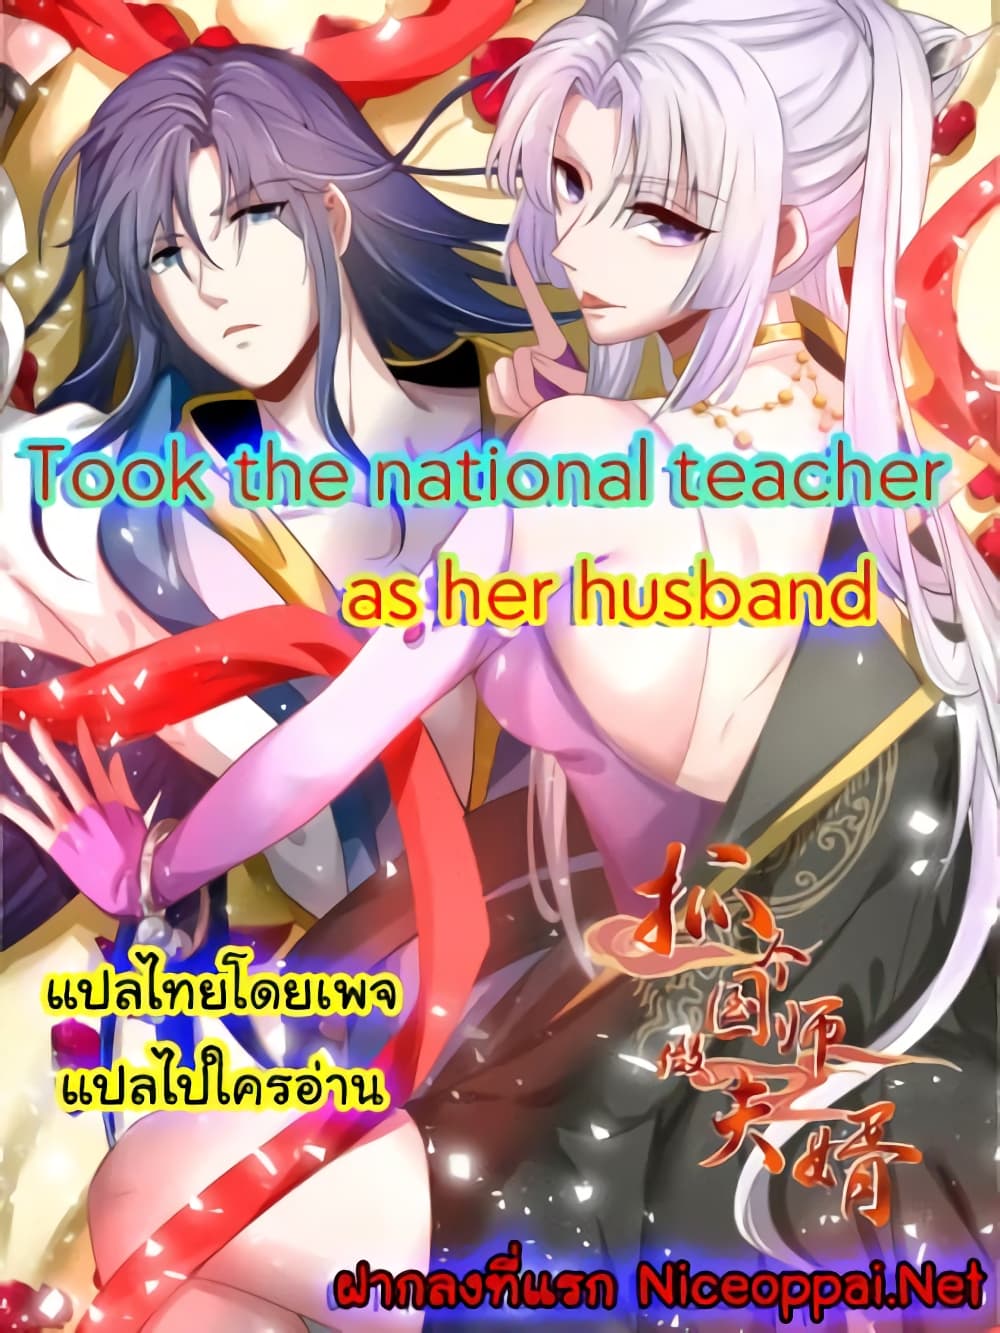 Took the National Teacher as Her Husband 41 (1)